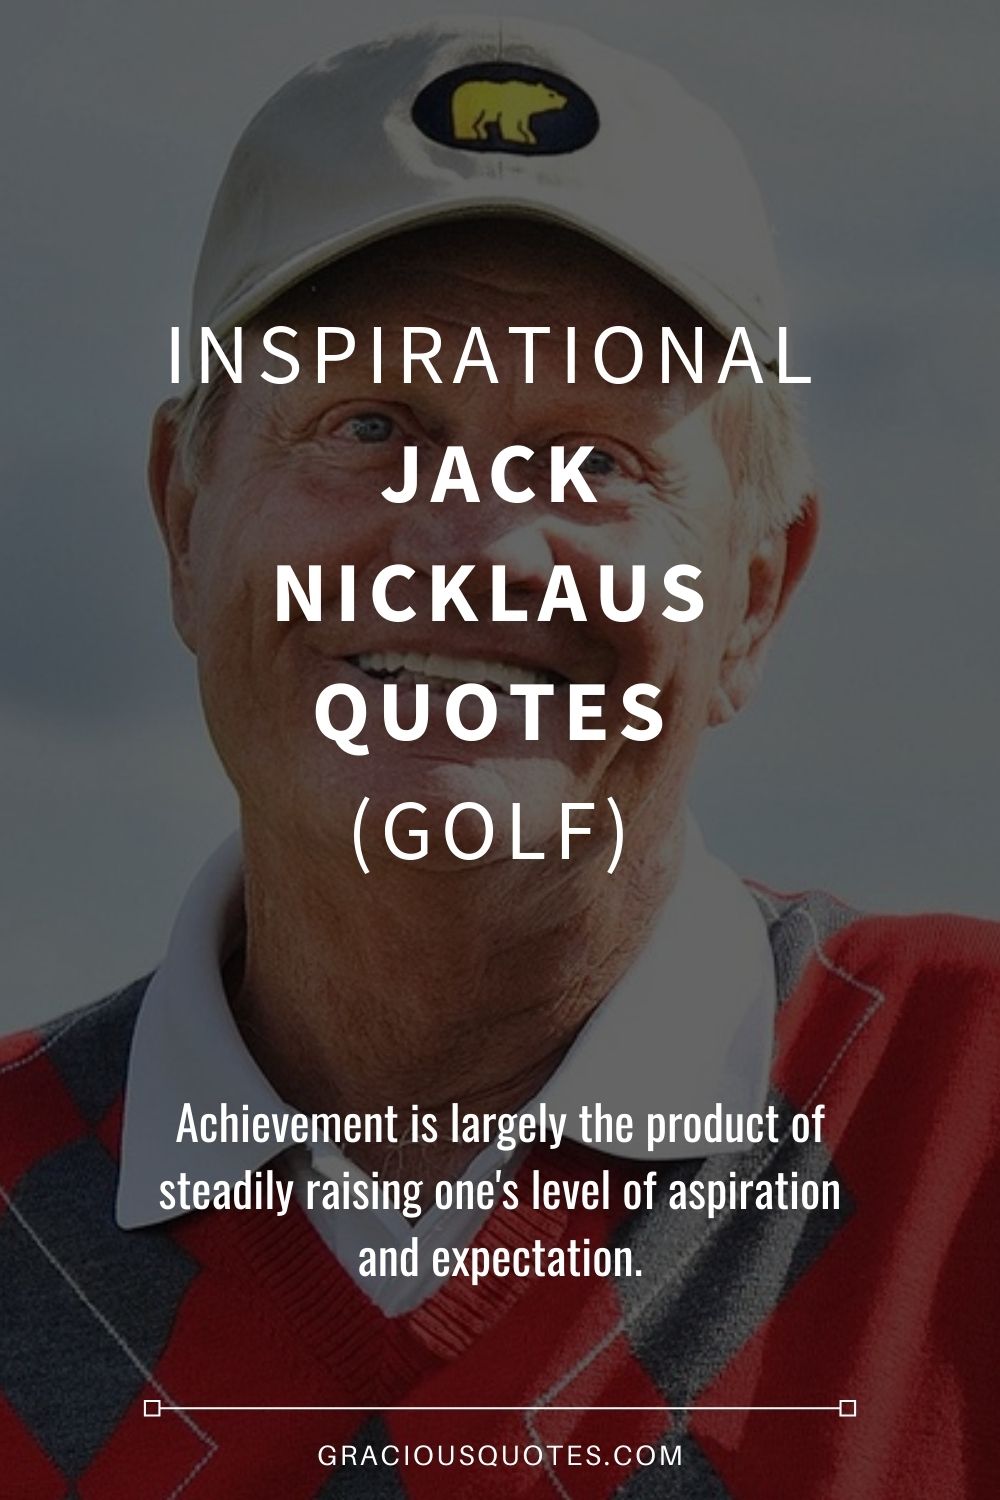 Inspirational Jack Nicklaus Quotes (GOLF) - Gracious Quotes